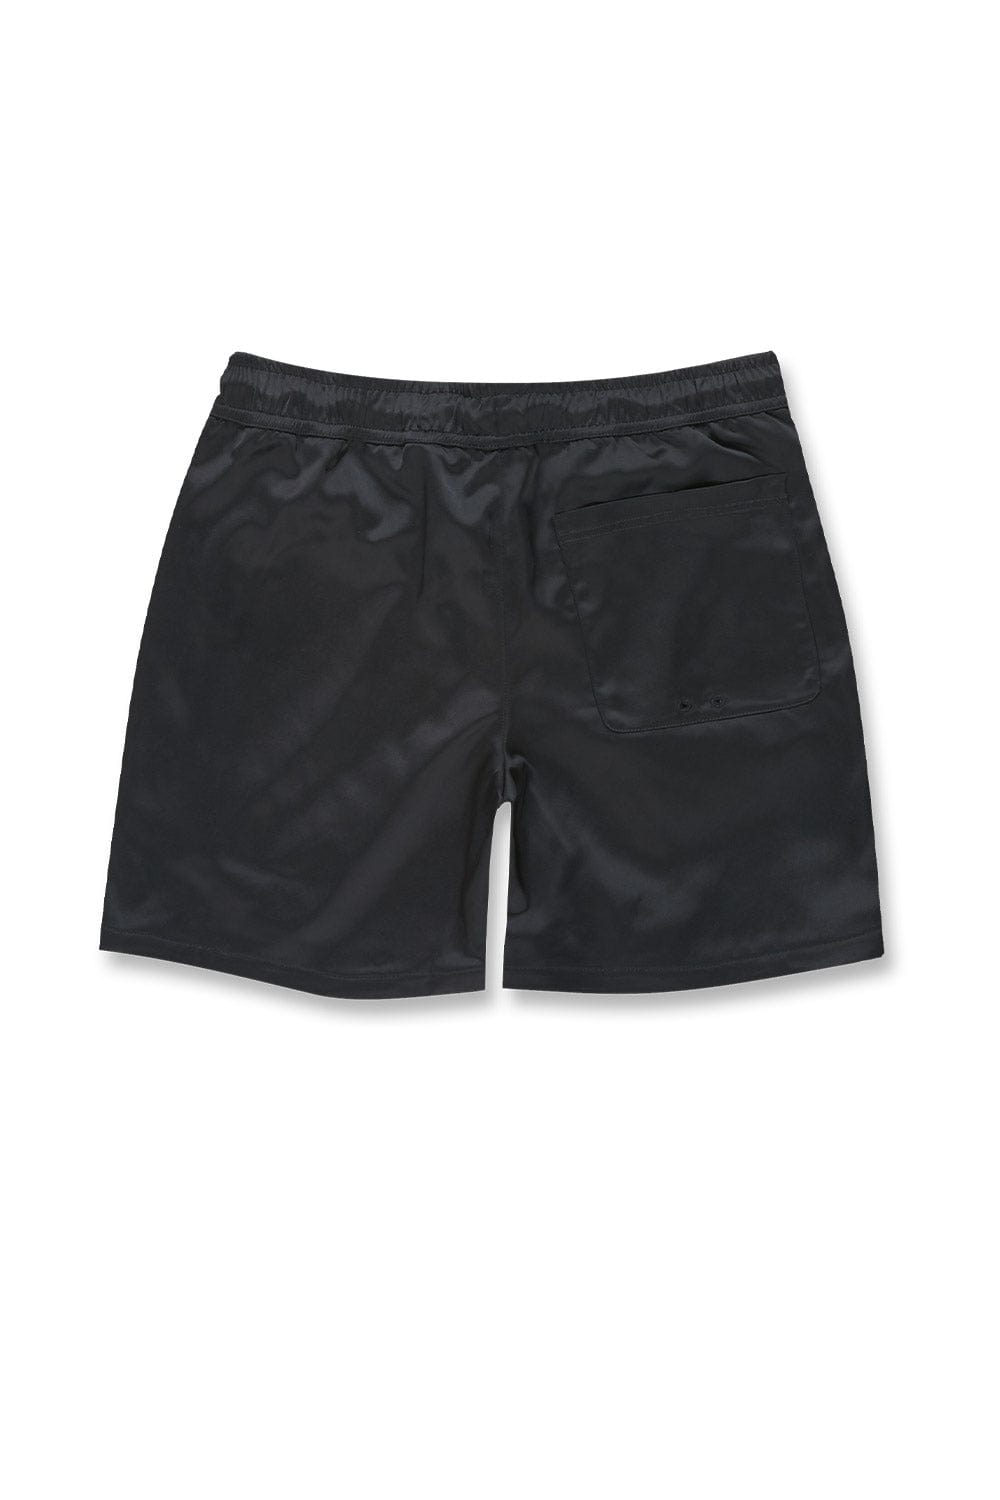 Jordan Craig Athletic - Lux Shorts